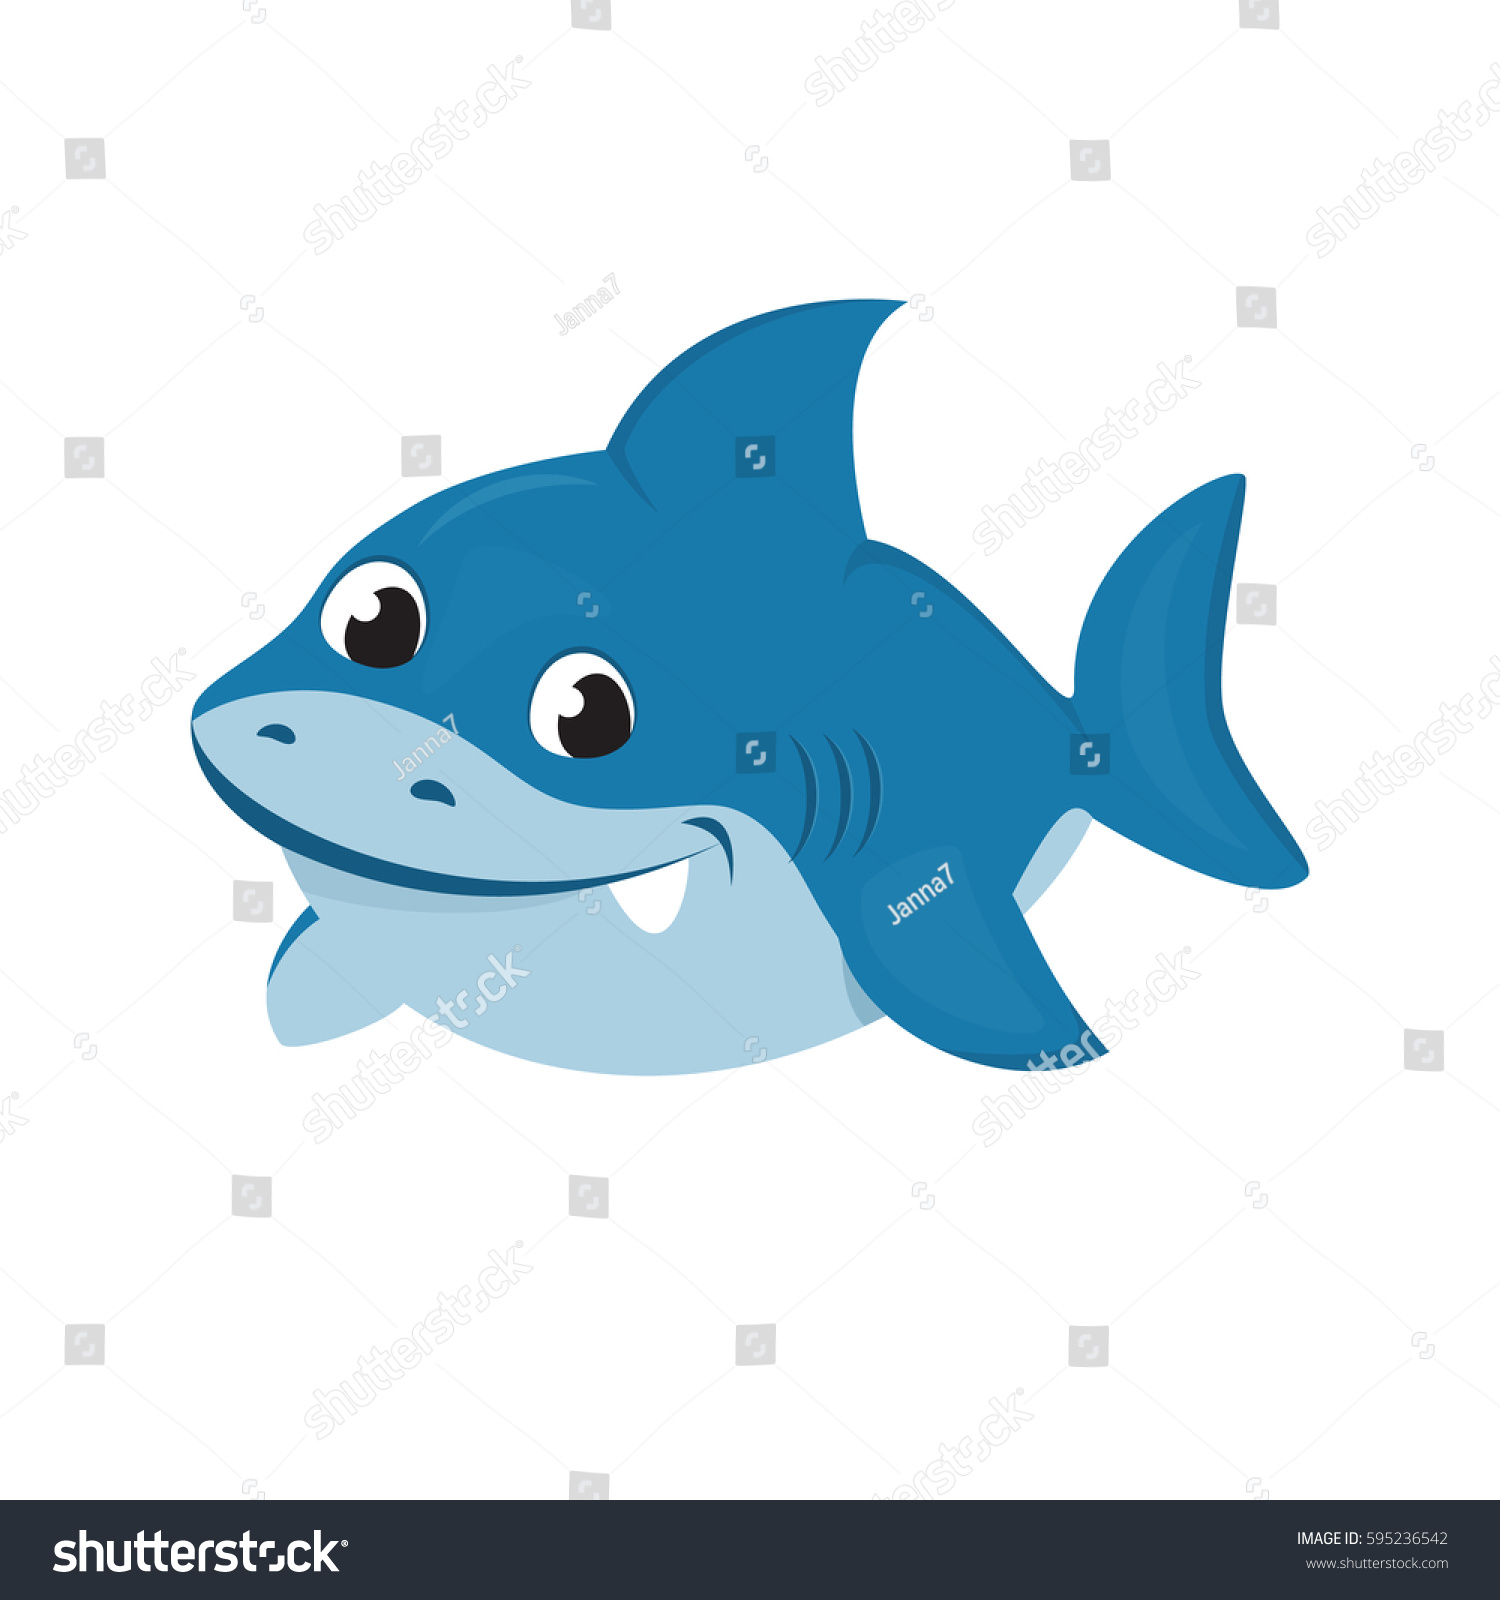 Download Cute Shark Cartoon Stock Vector 595236542 - Shutterstock